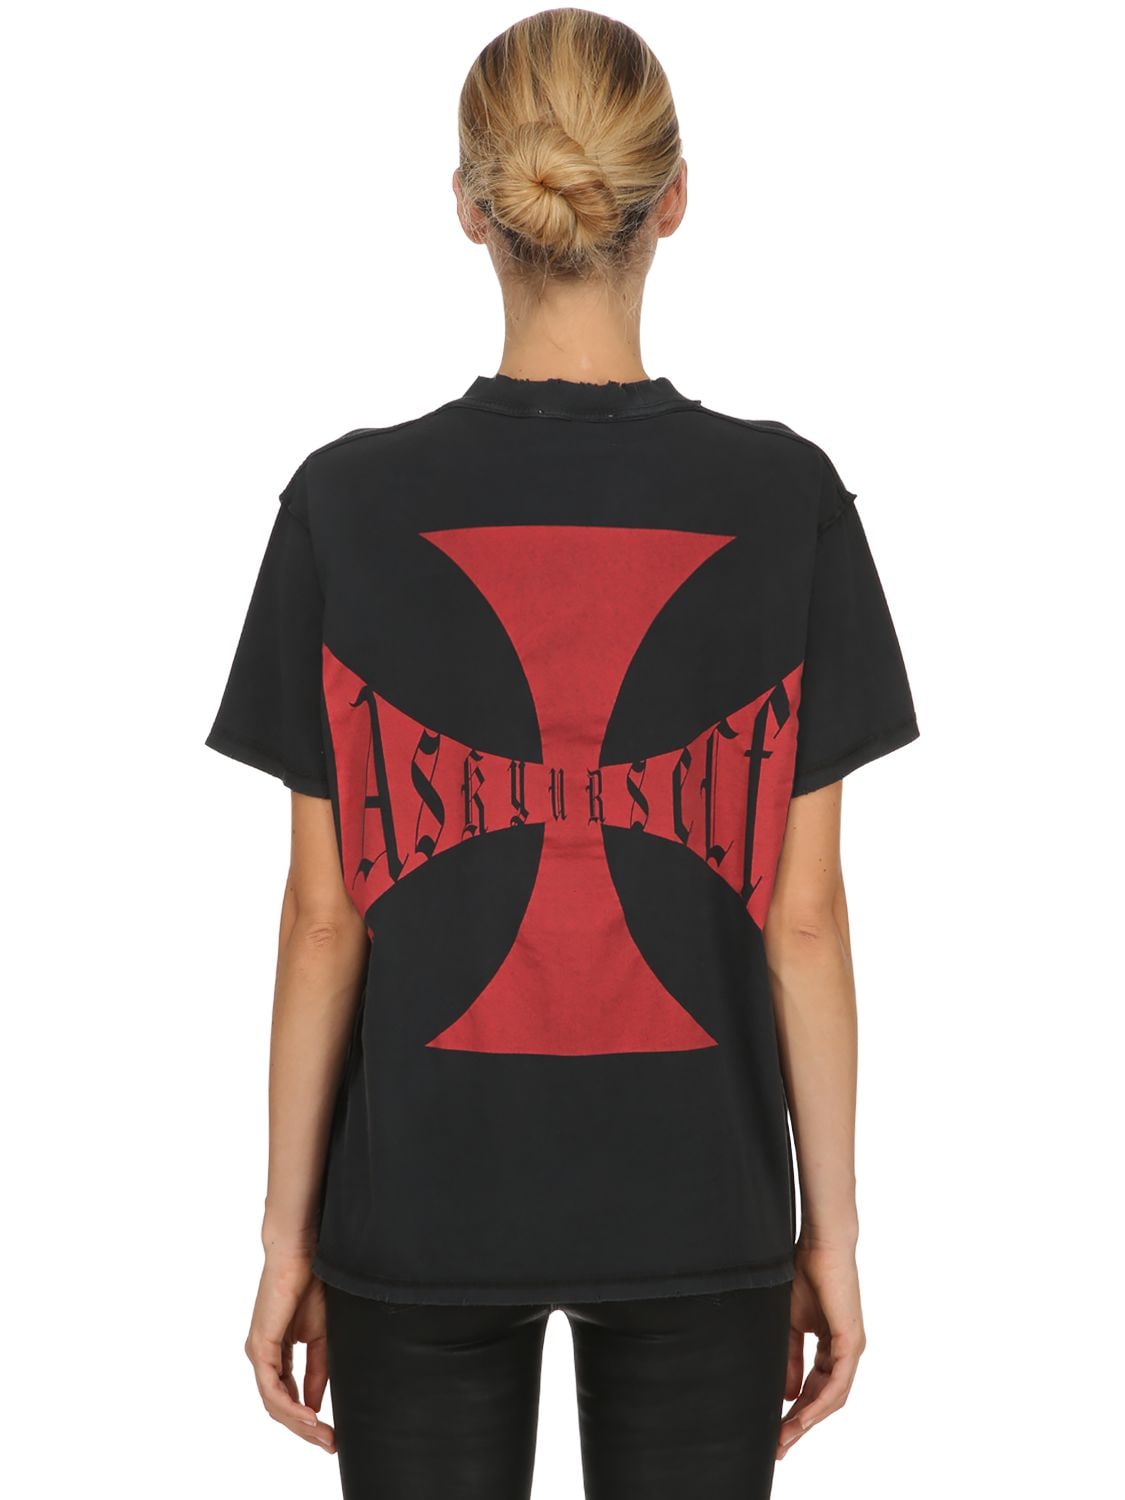 Askyurself Signature Cross Cotton Jersey T-shirt In Black